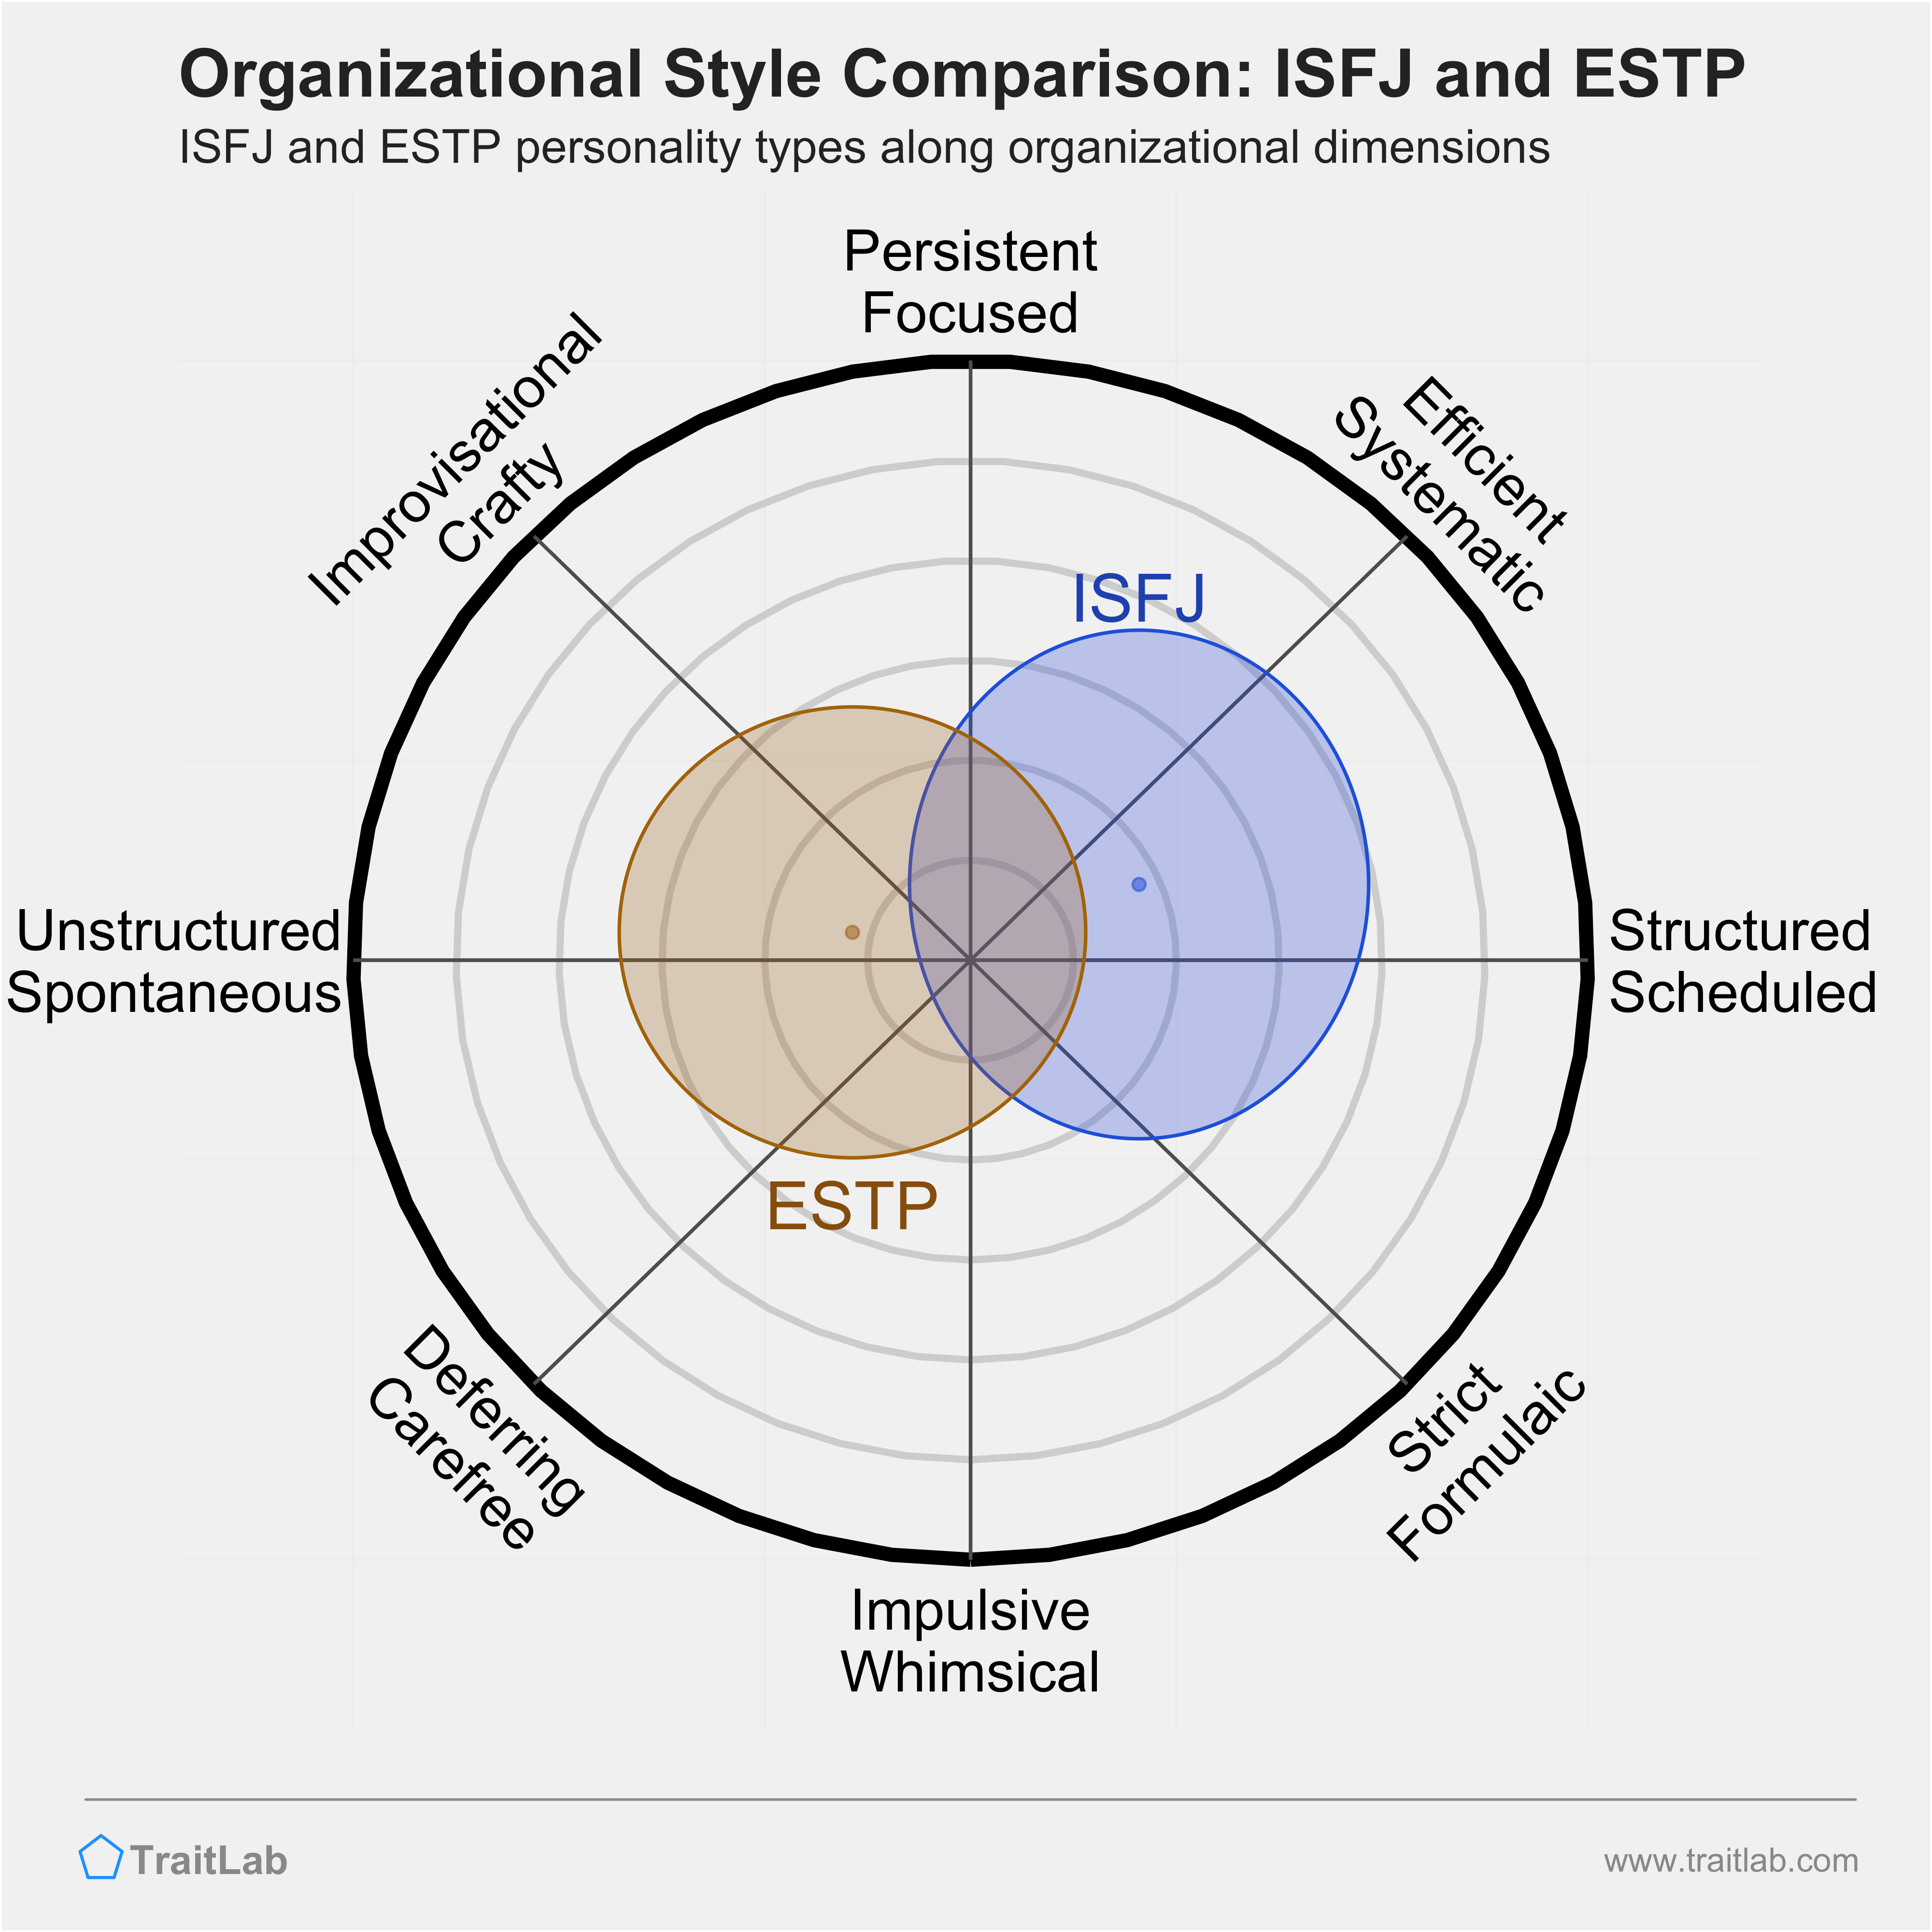 ISFJ and ESTP comparison across organizational dimensions